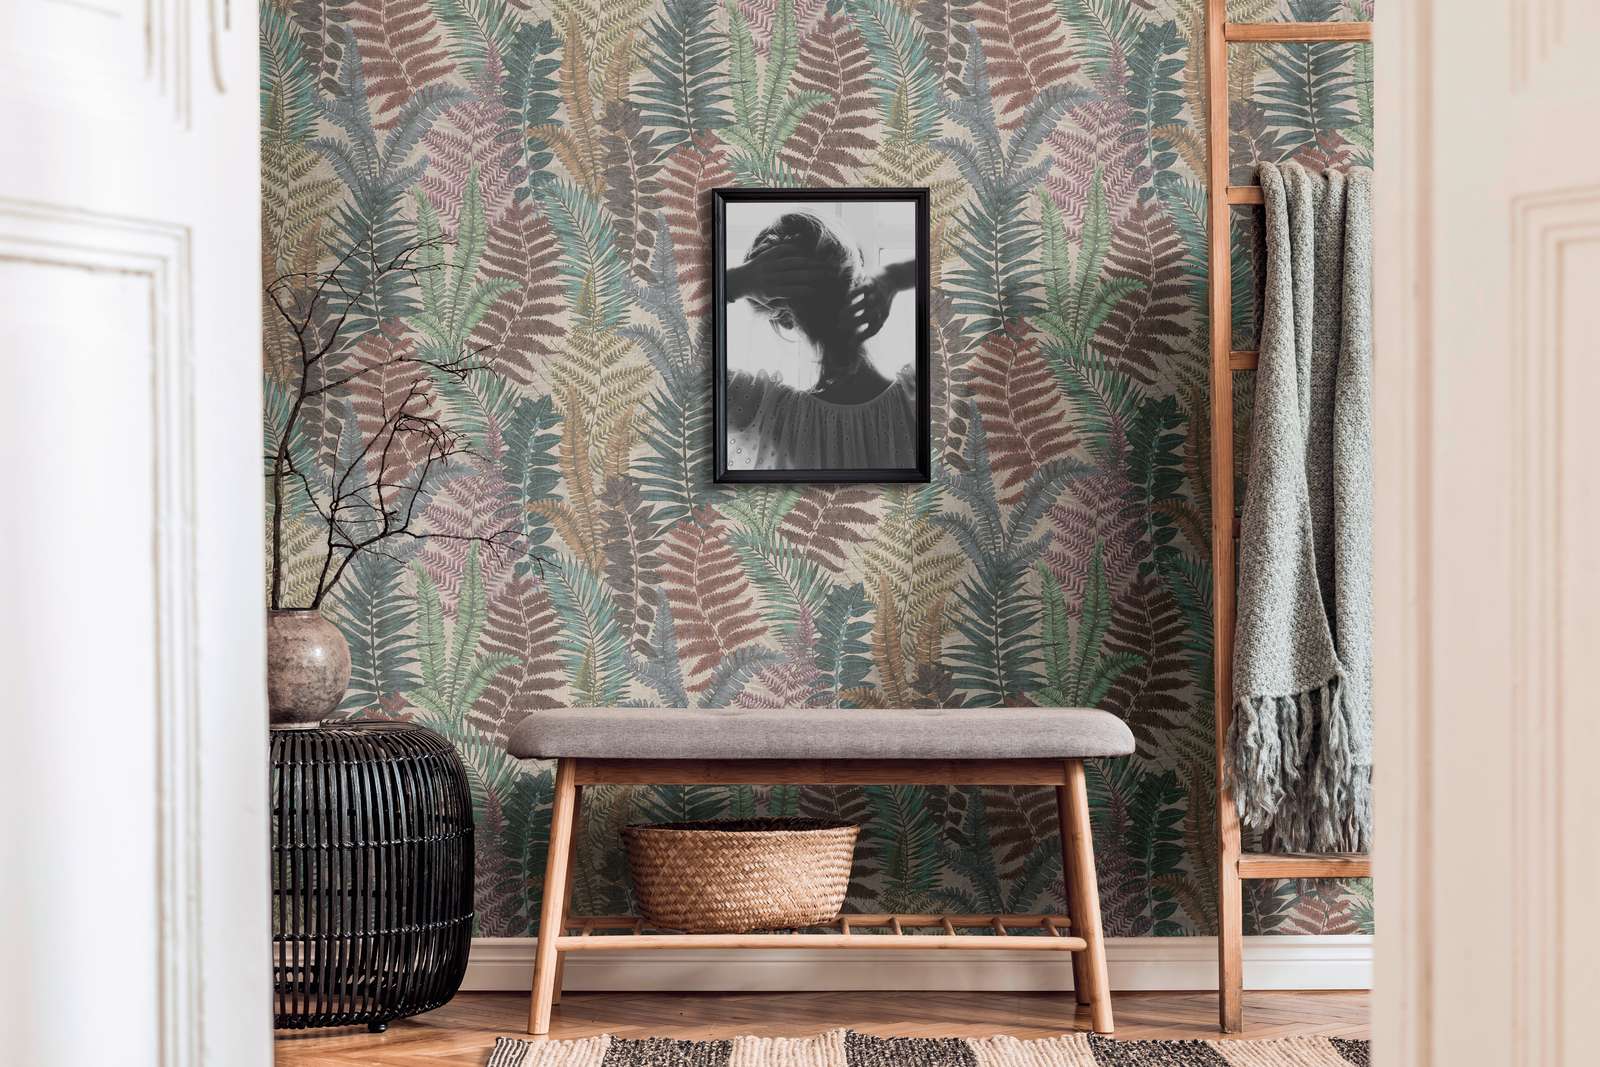             Floral wallpaper with fern leaves lightly textured, matt - multicoloured, beige, green
        